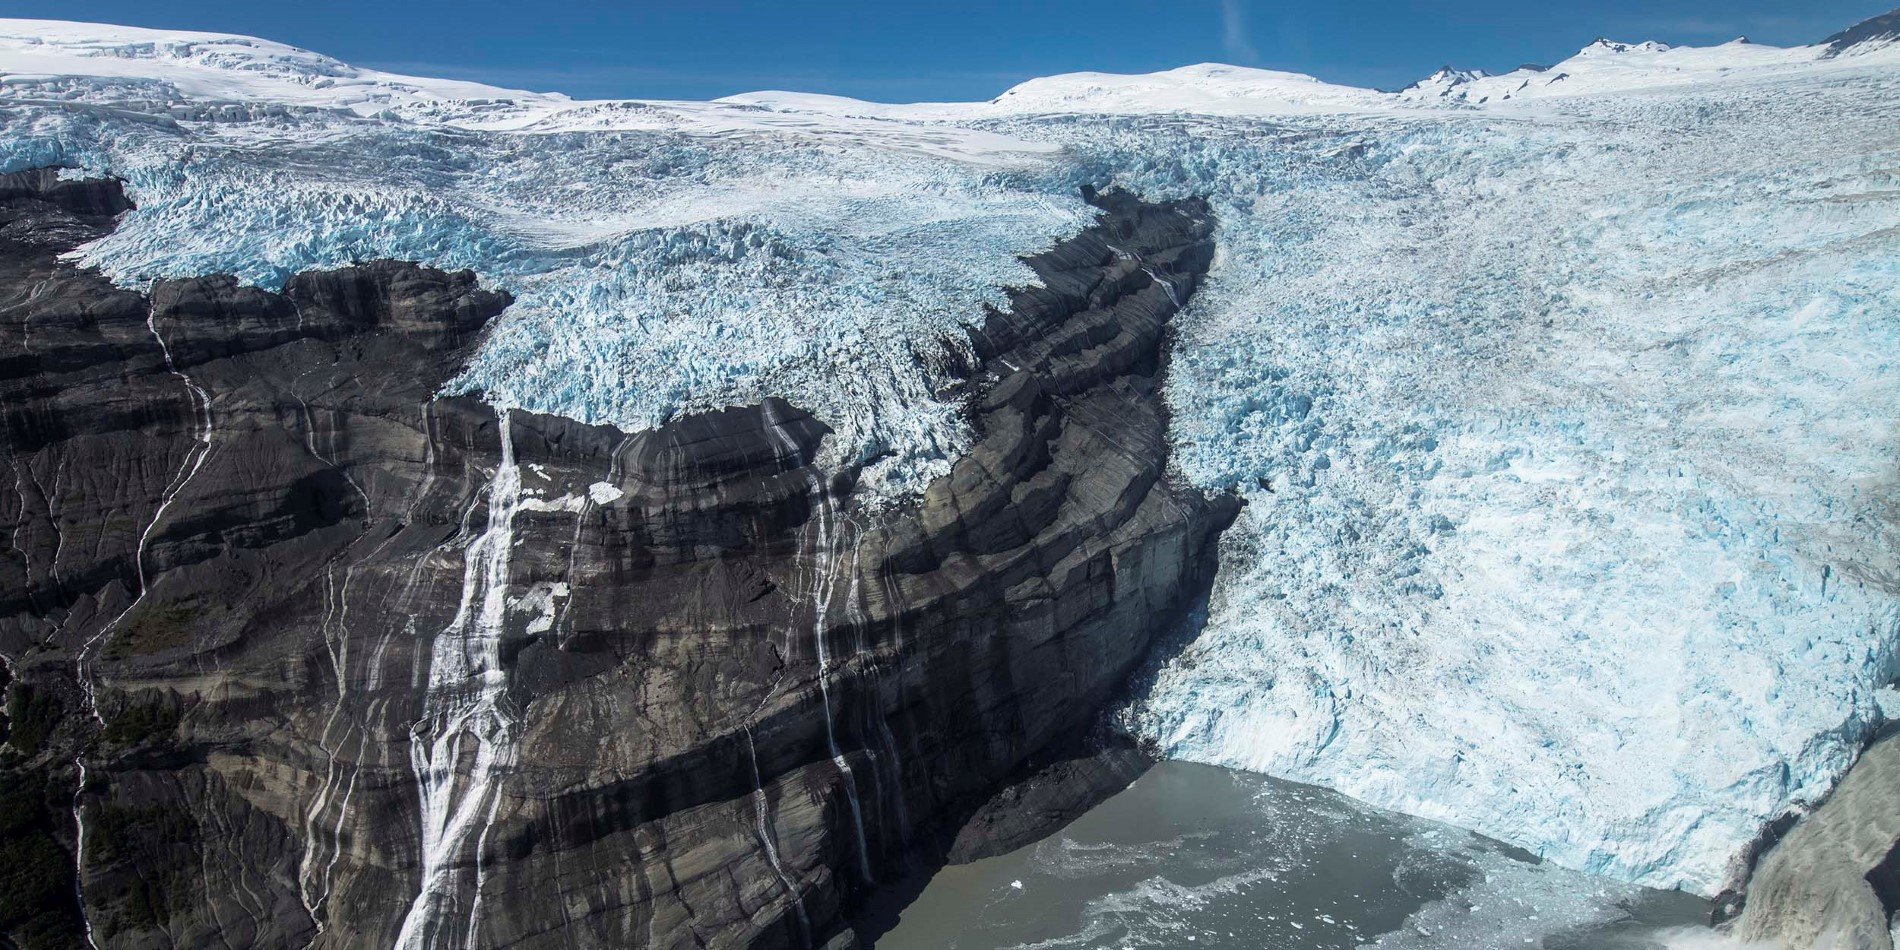 Powerful glaciers dominate the landscape.